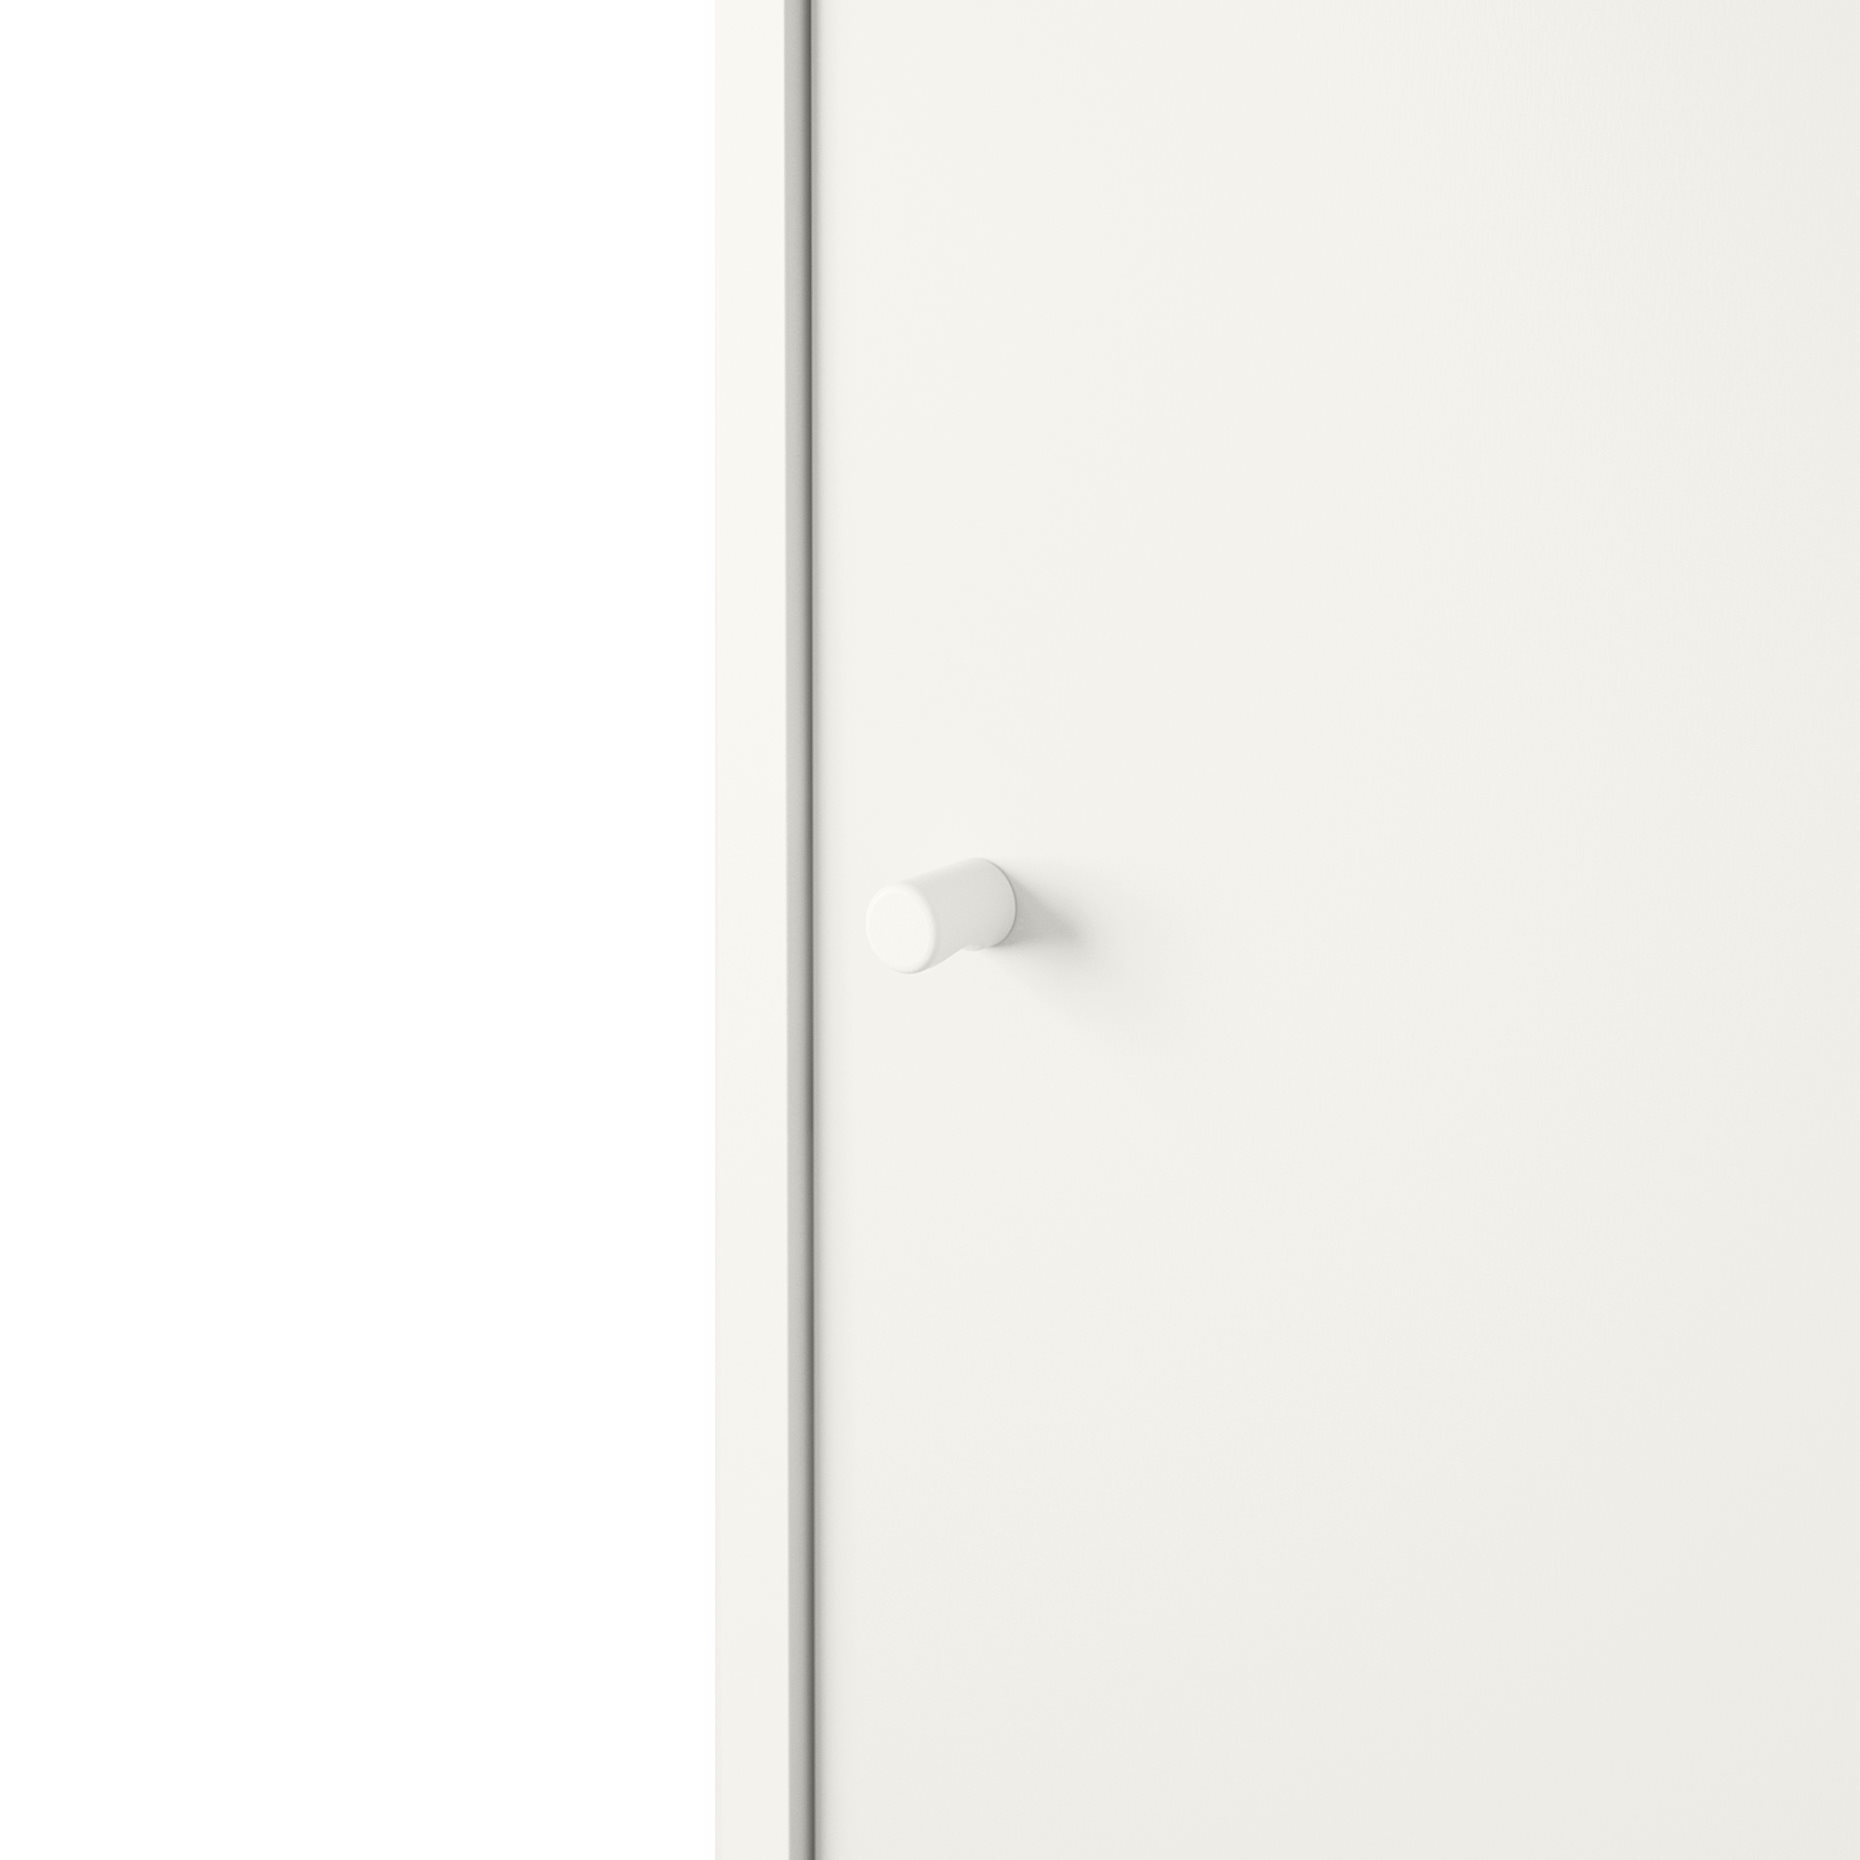 KLEPPSTAD, ντουλάπα με συρόμενες πόρτες, 117x176 cm, 904.372.38